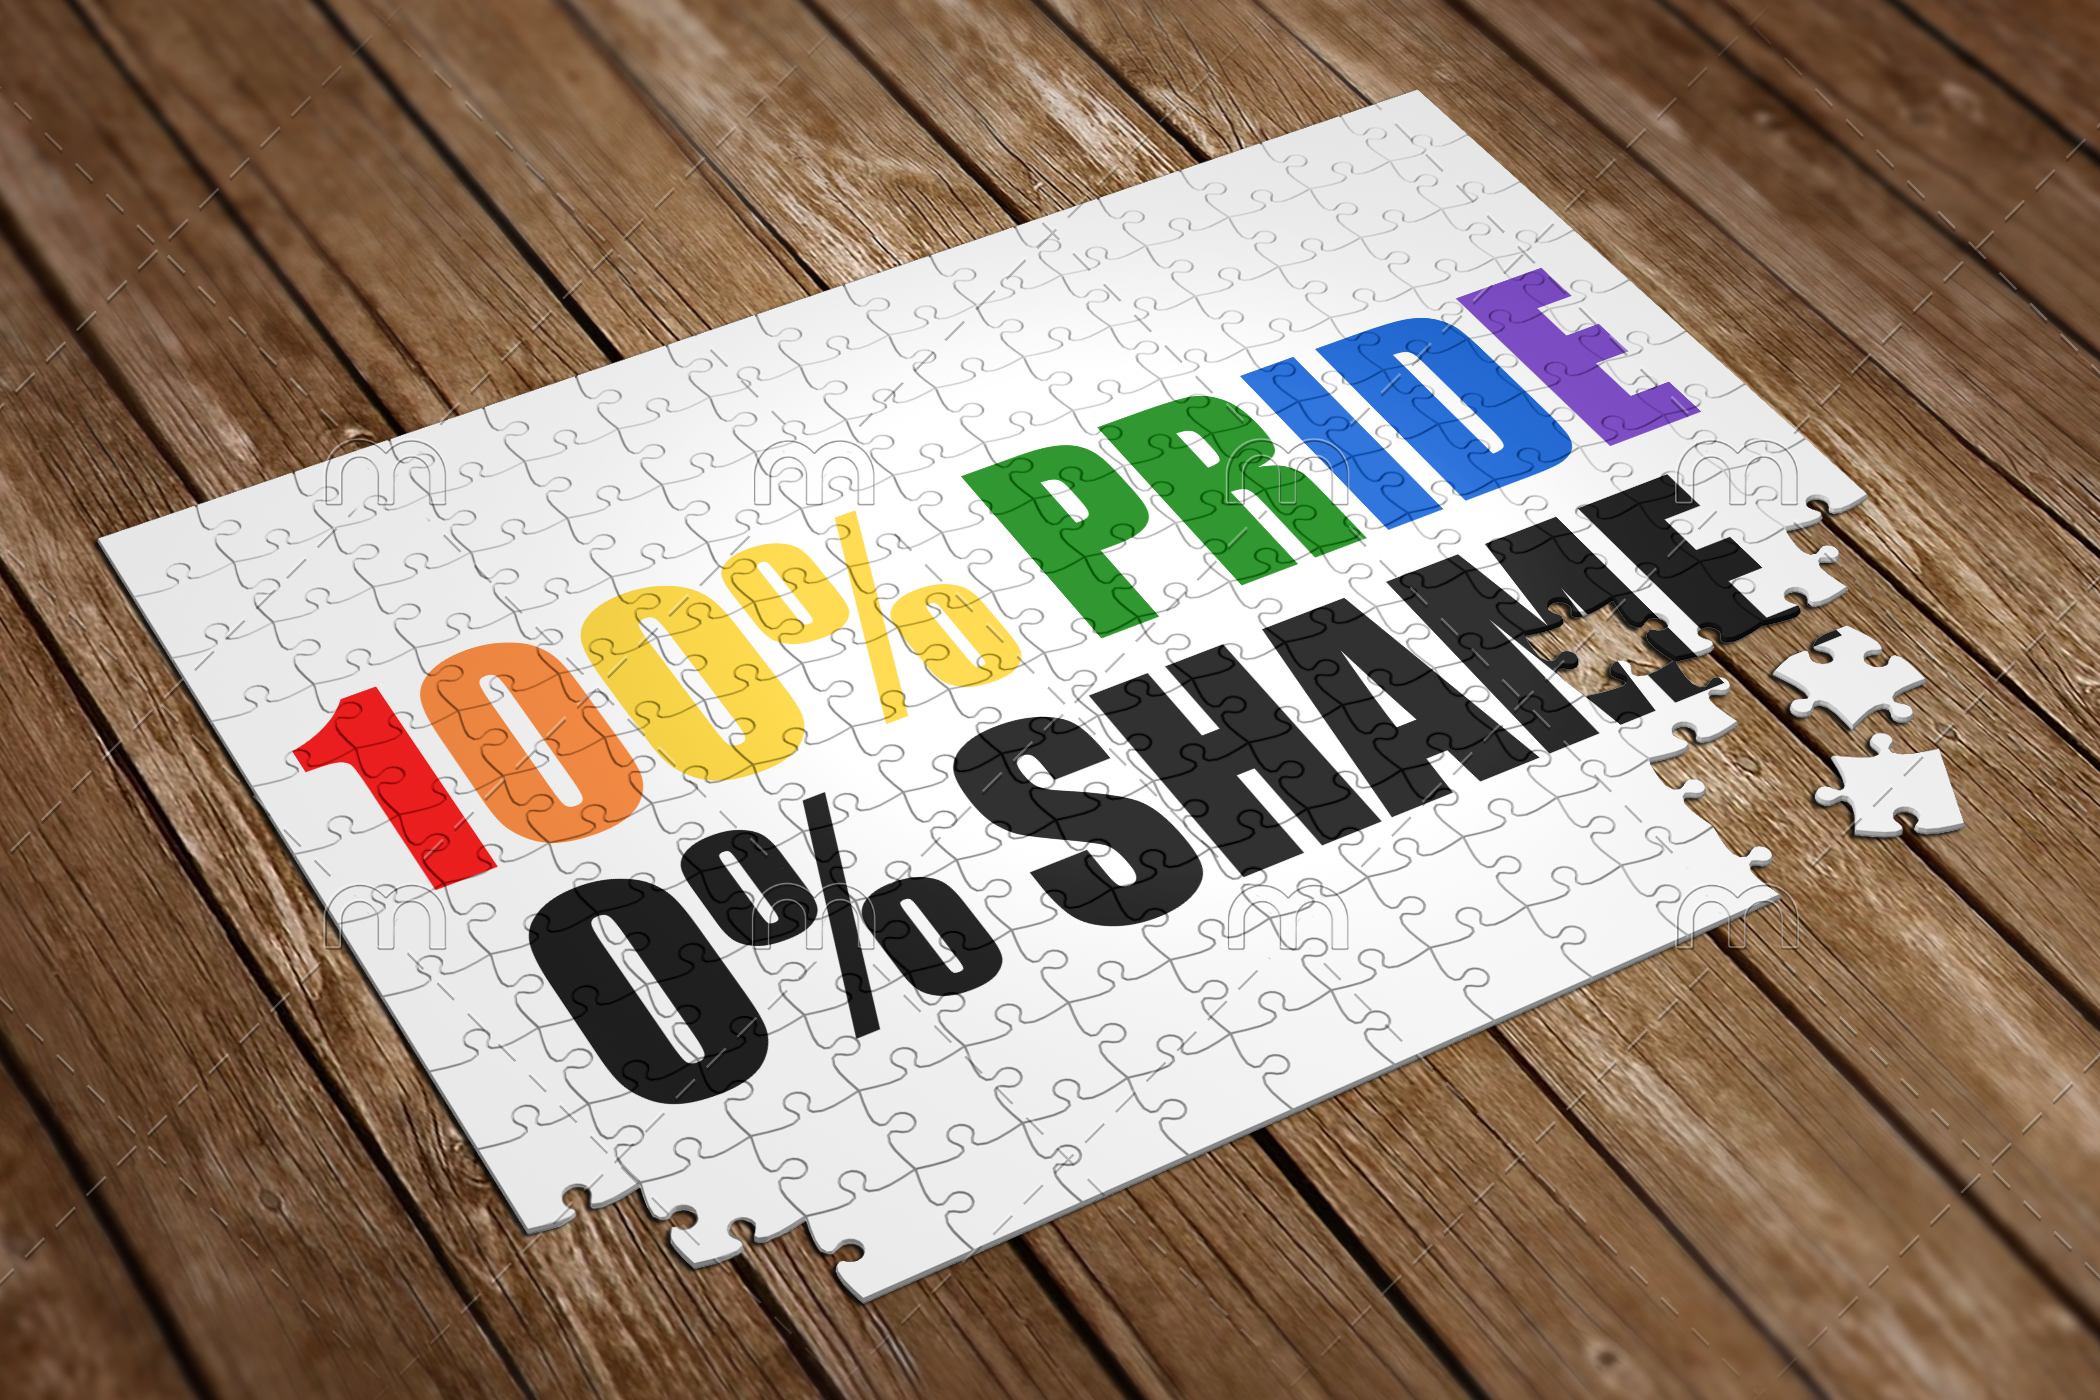 100 percent pride 0 percent shame puzzle